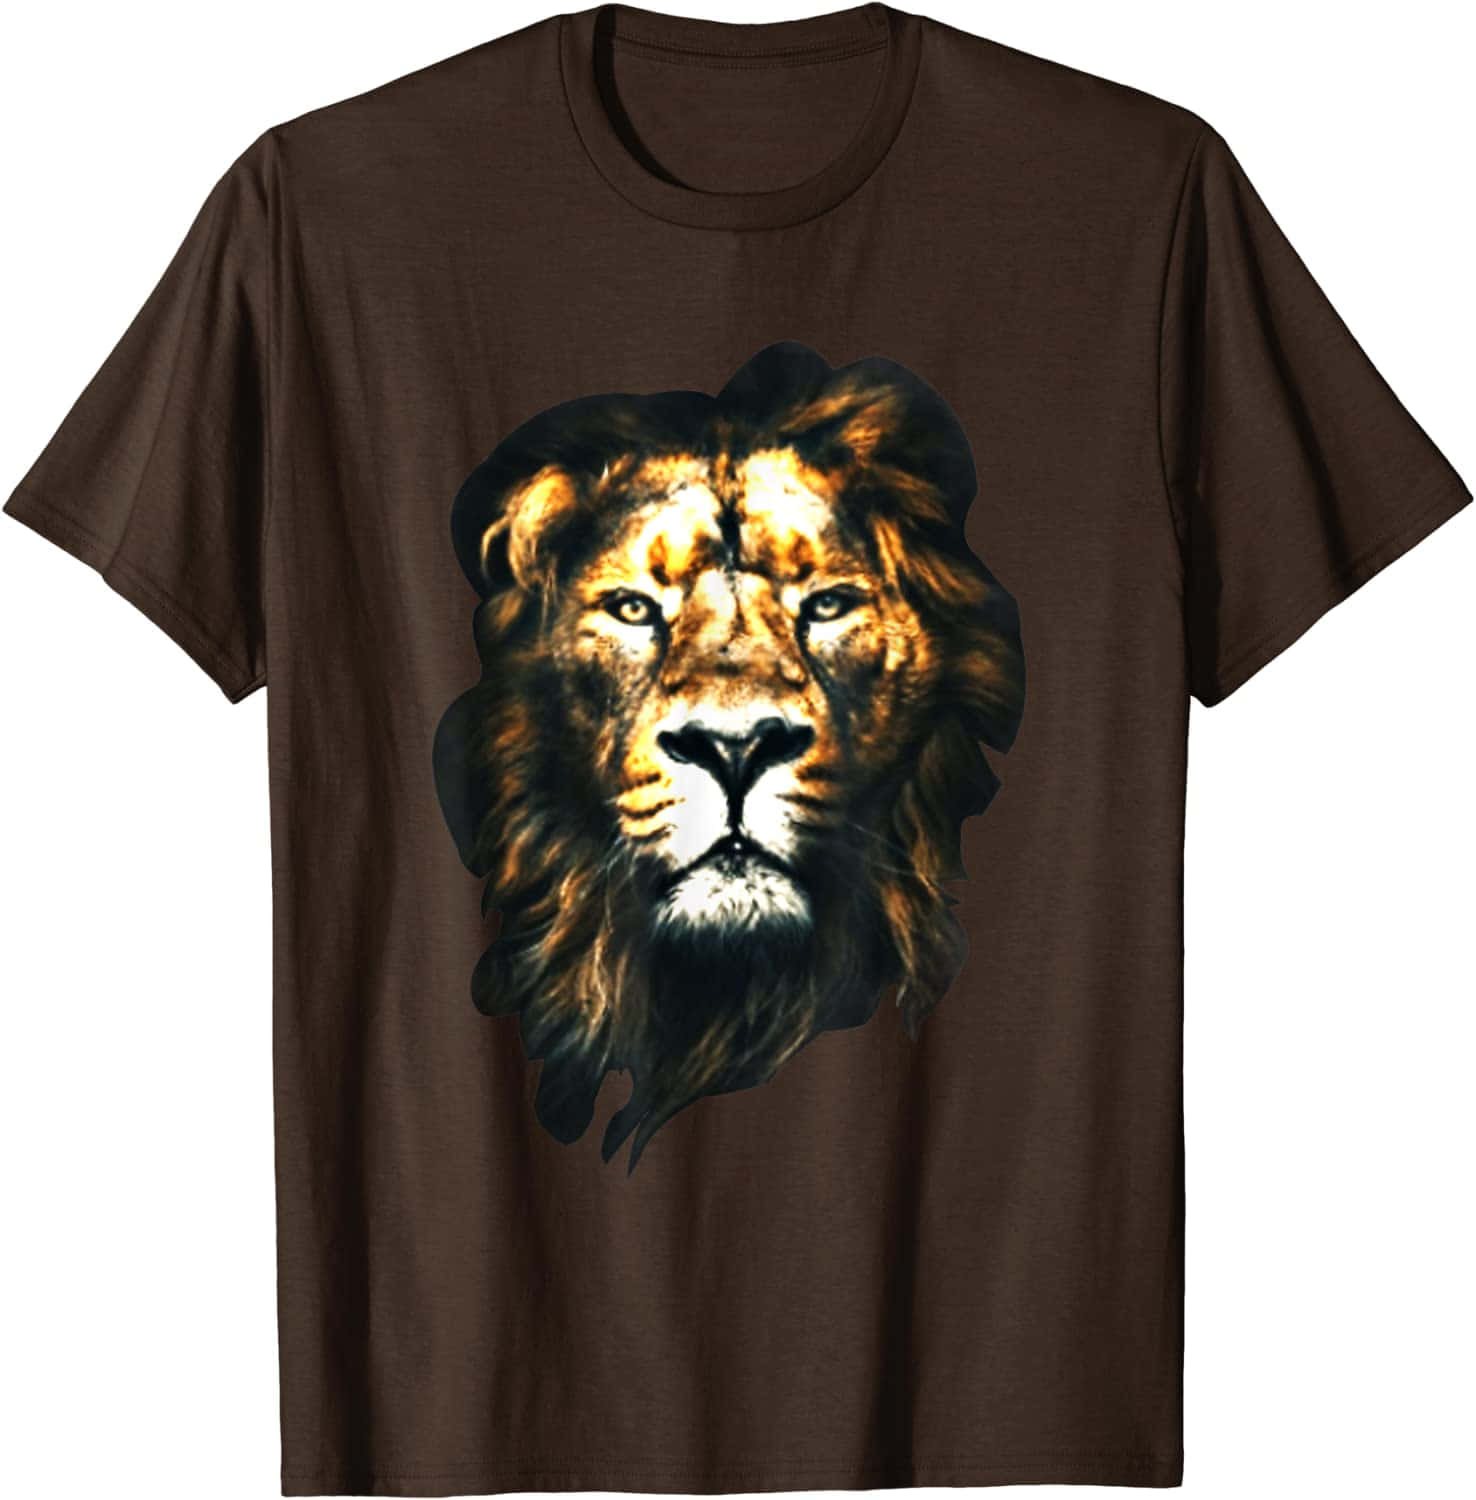 A Lion Head On A Brown T - Shirt